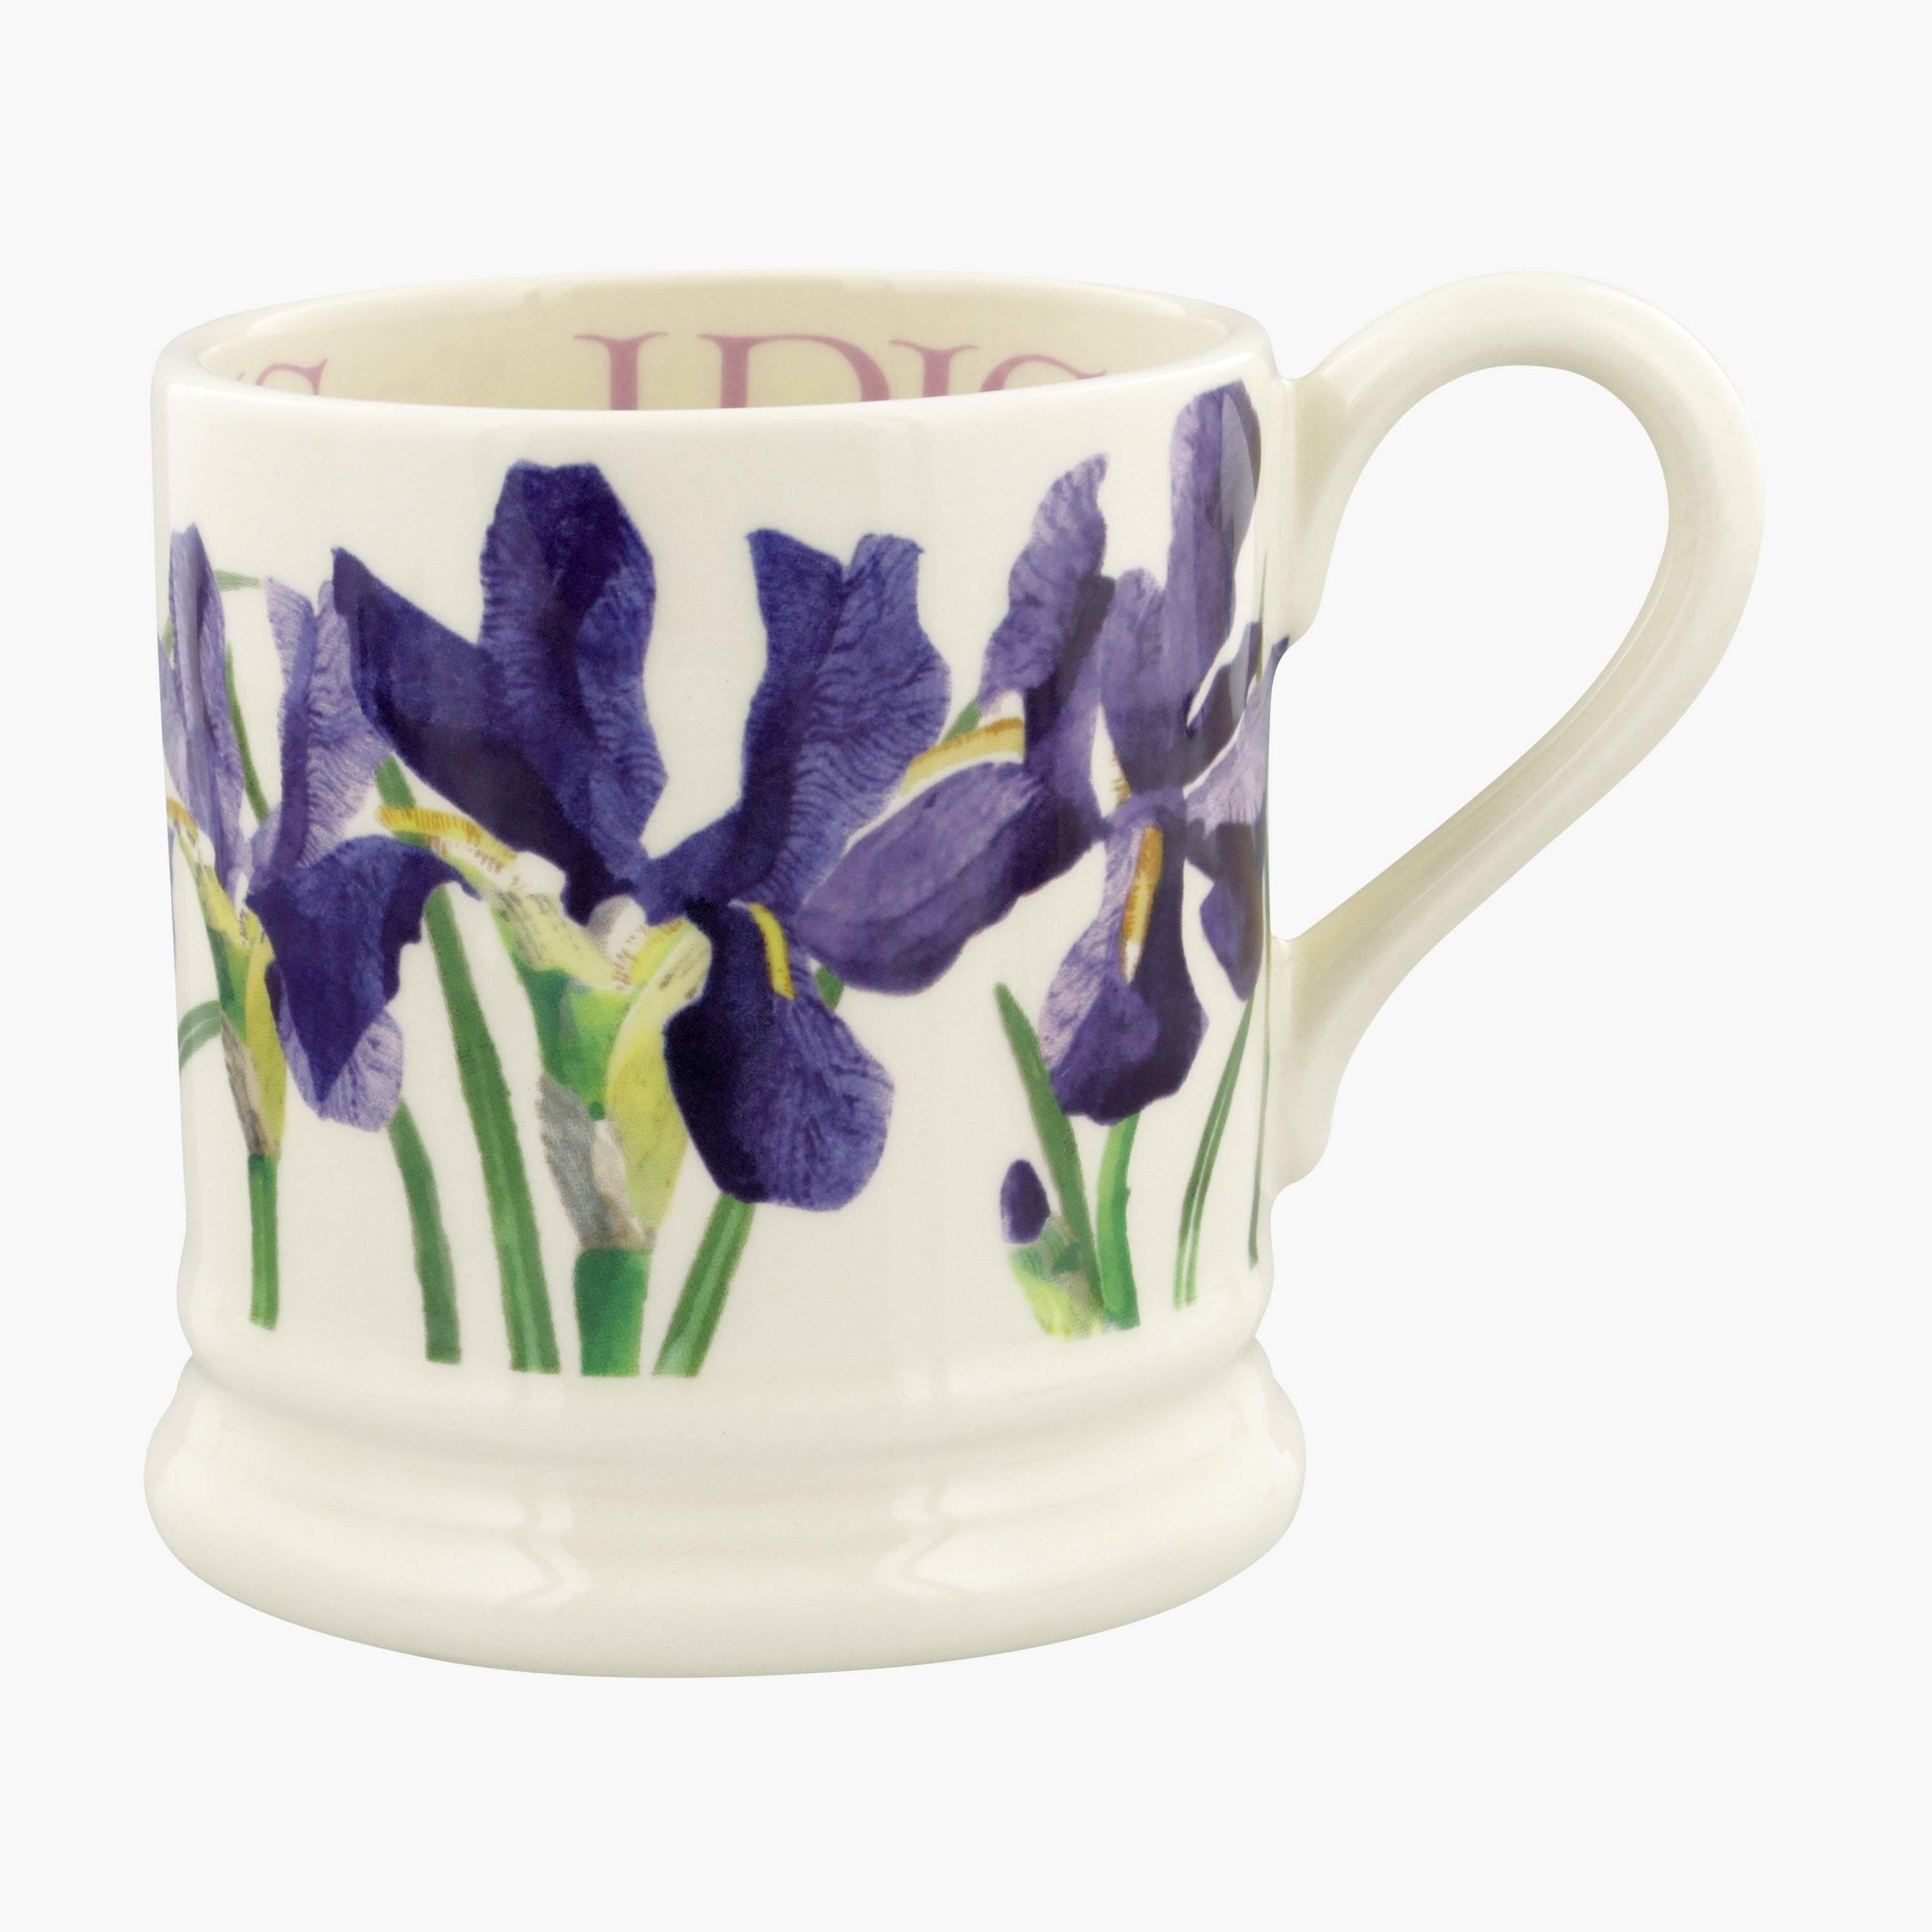 Emma Bridgewater  Seconds Flowers Blue Iris 1/2 Pint Mug - Unique Handmade & Handpainted English Earthenware Tea/Coffee Mug